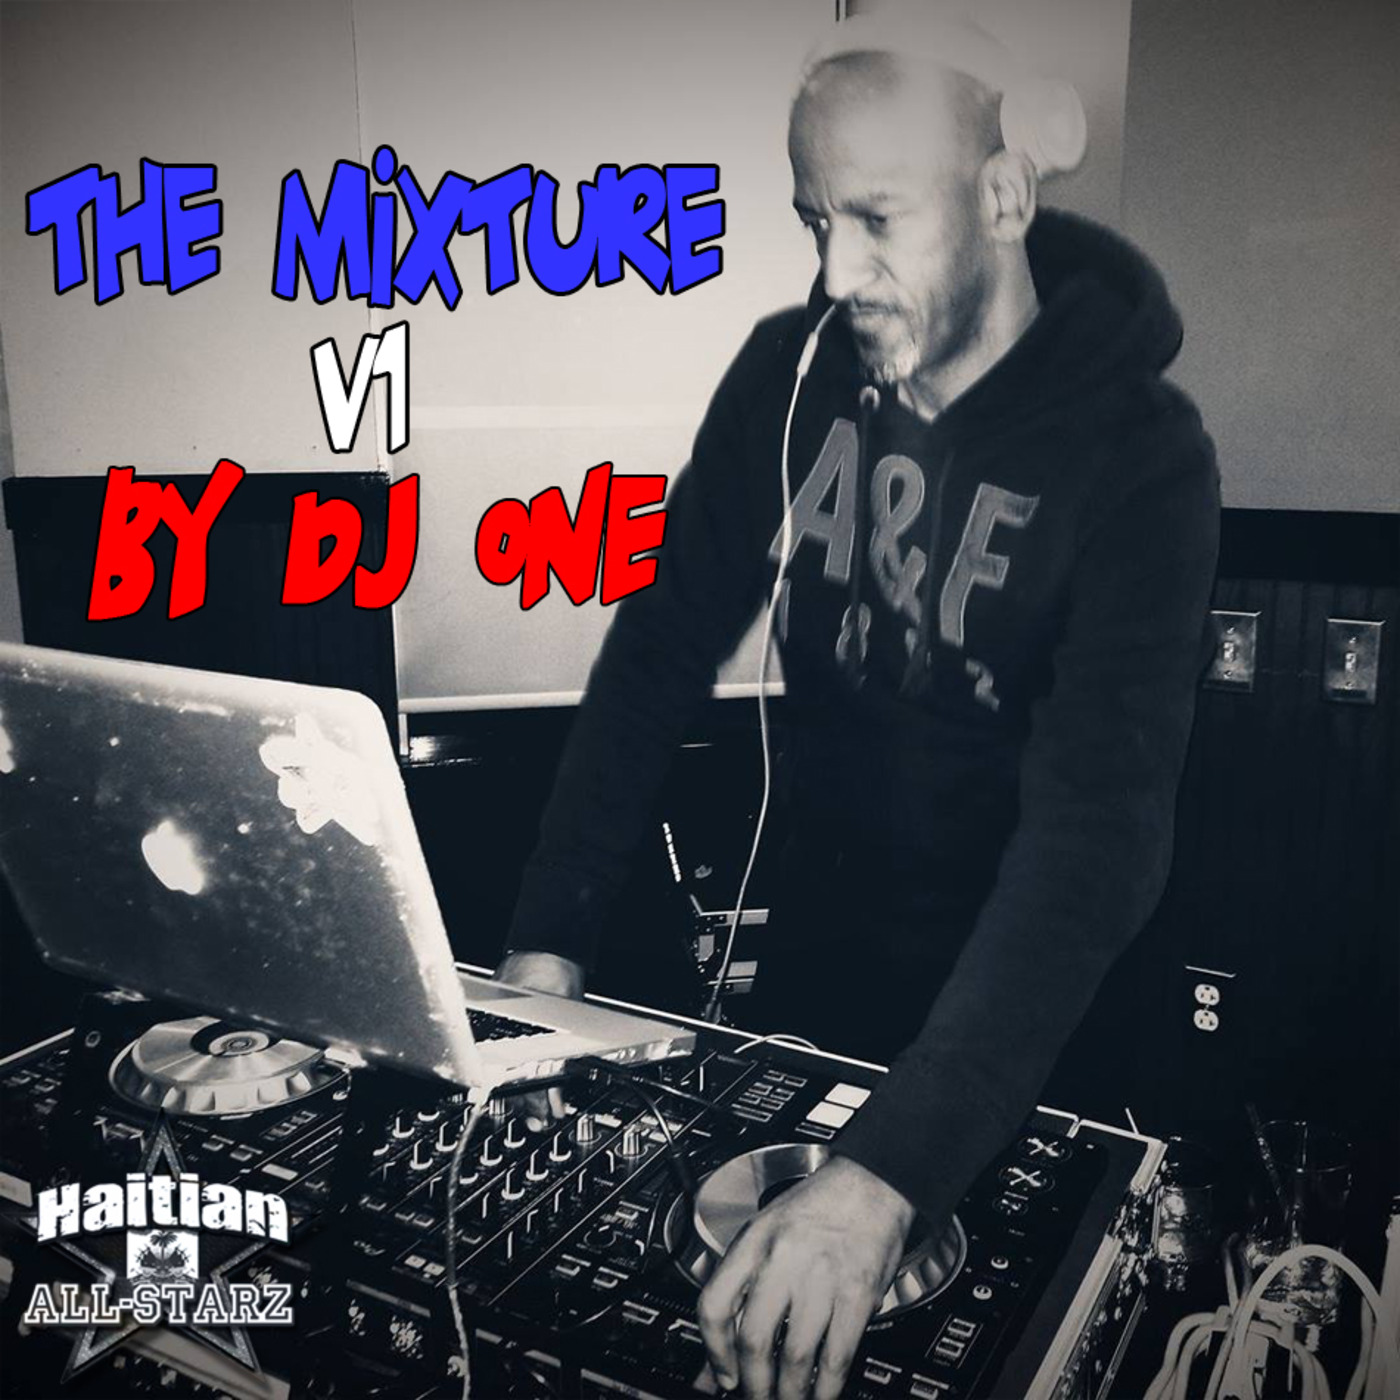 The Mixture V1 Mixed By DJ One (Haitian All-StarZ)